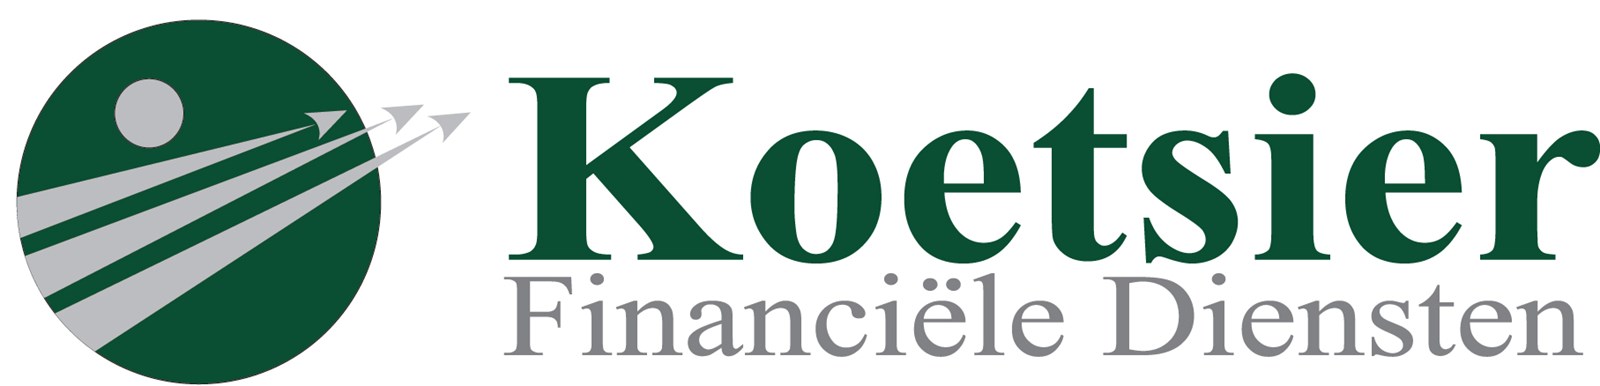 Logo van Koetsier Financiele Diensten